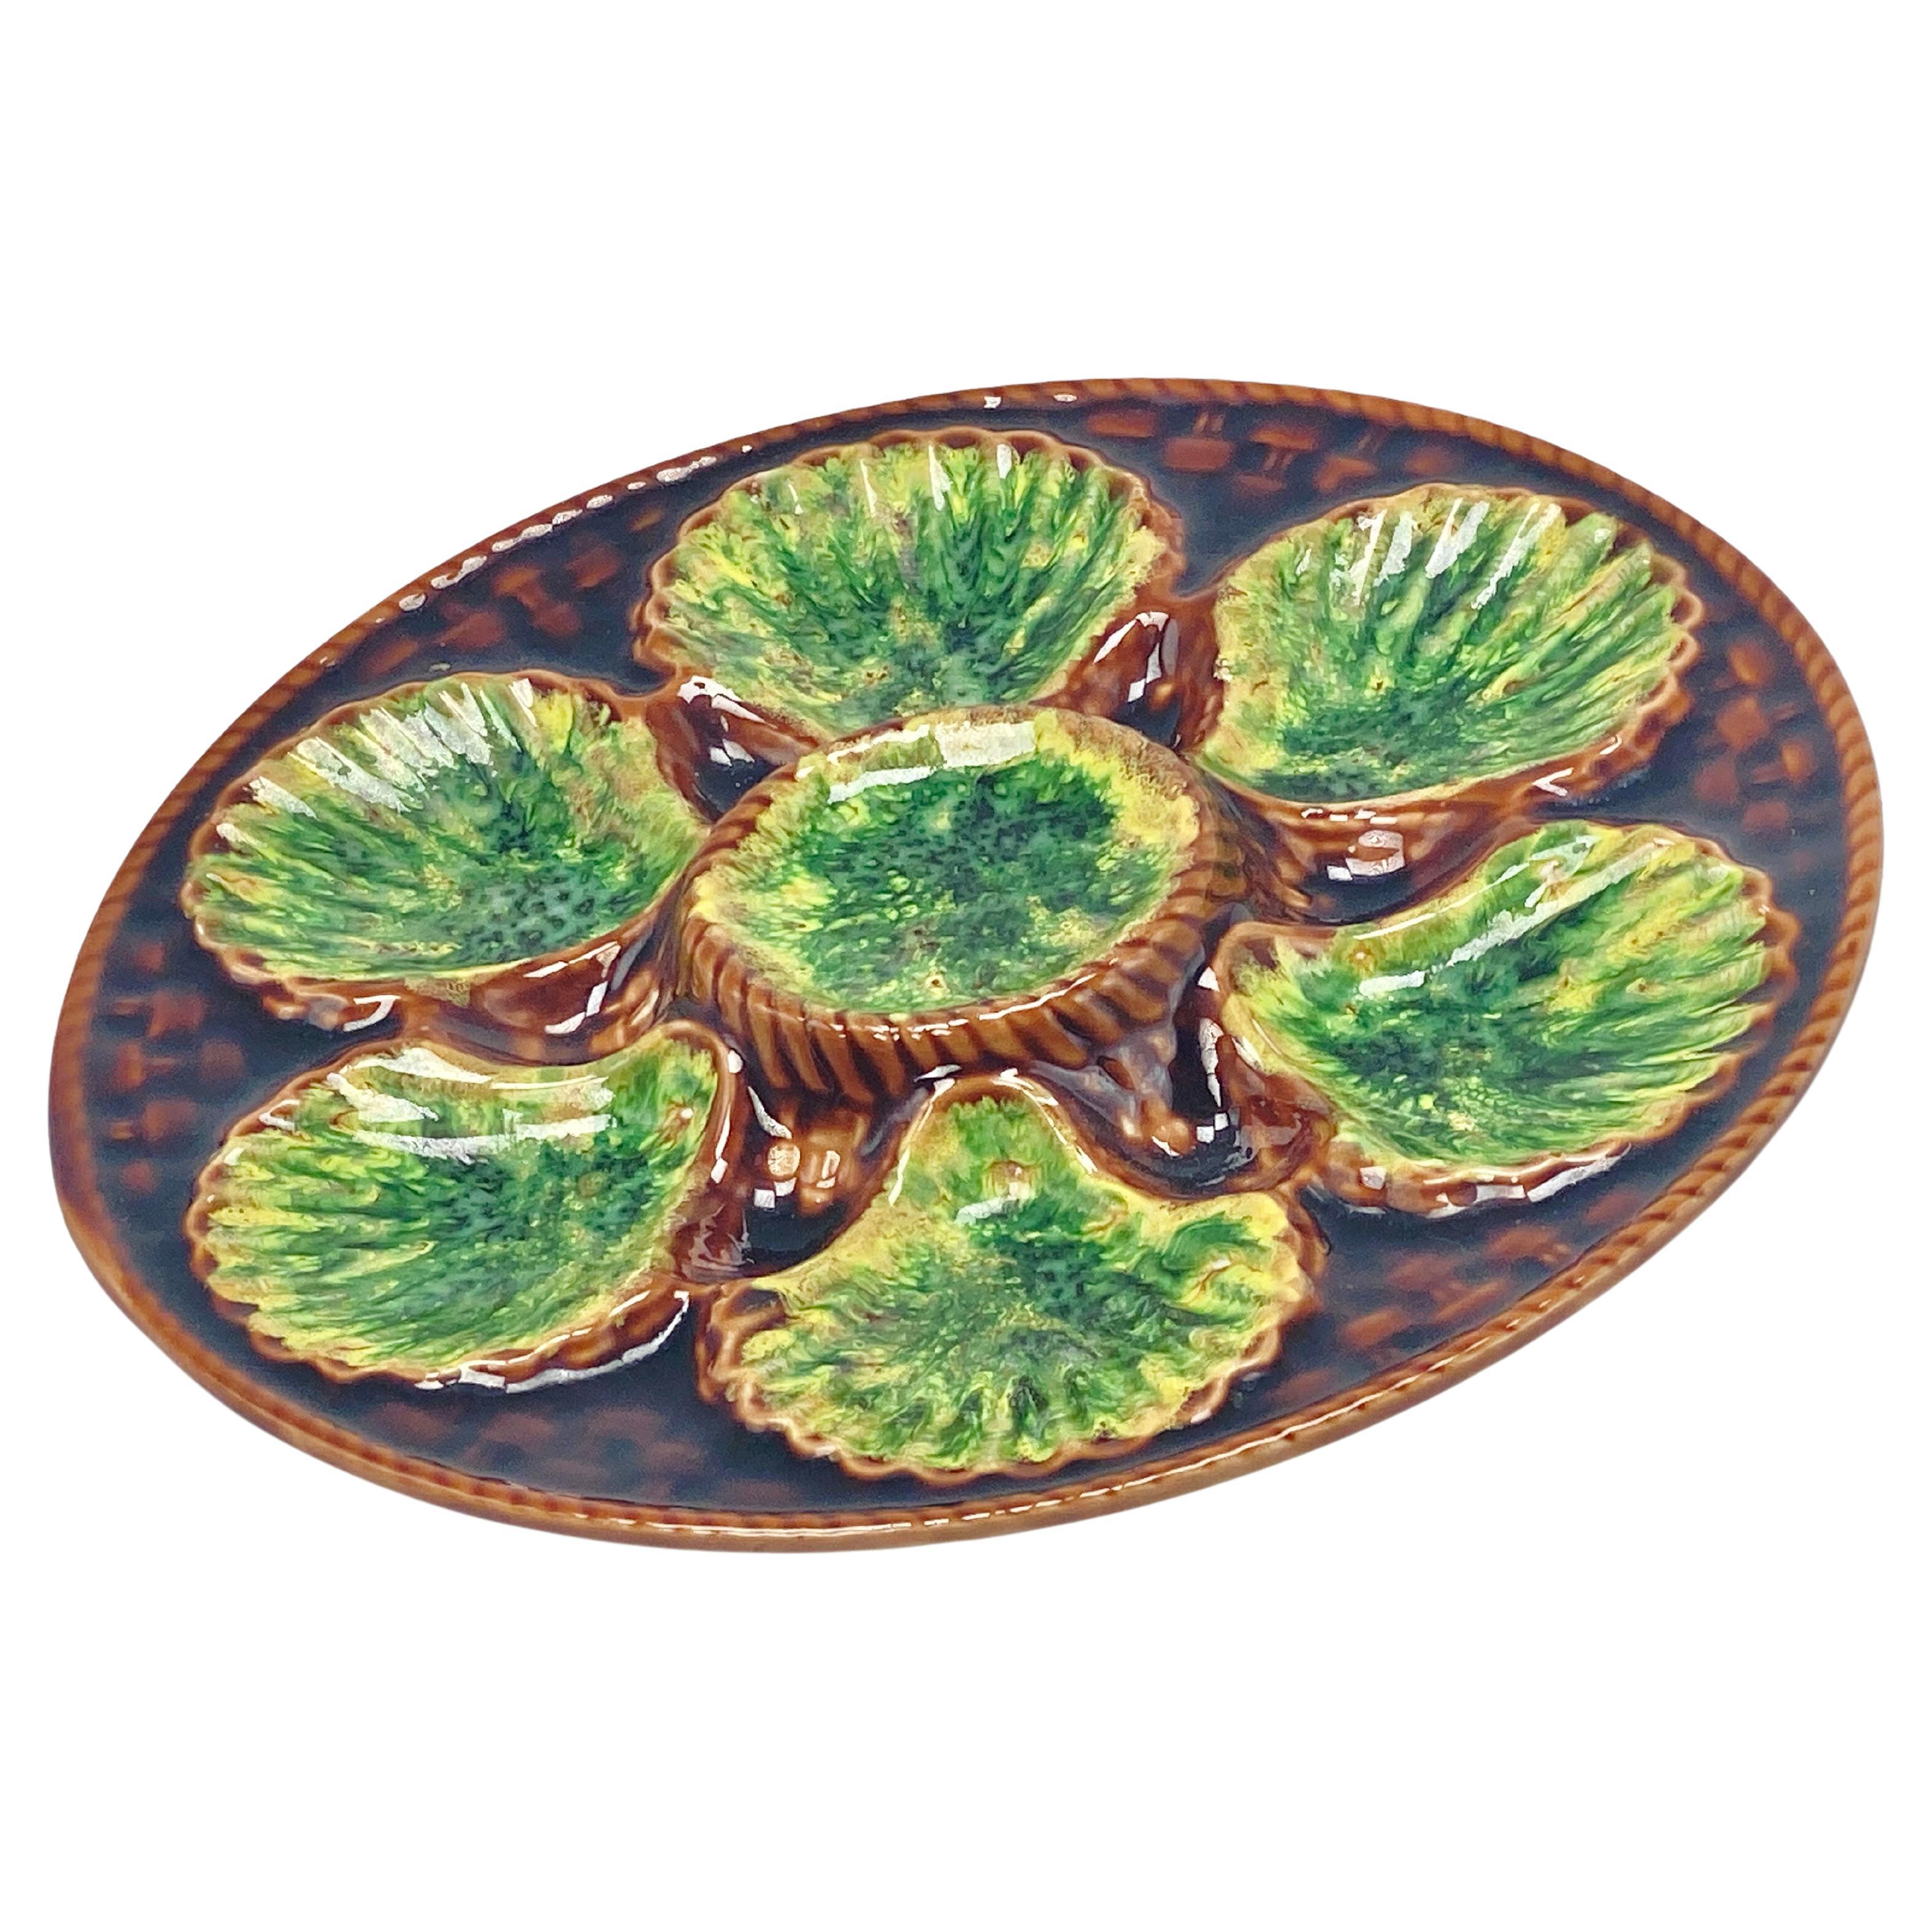 Grüner Majolika-Austernteller , frühes 20. Jahrhundert, braune und grüne Farbe